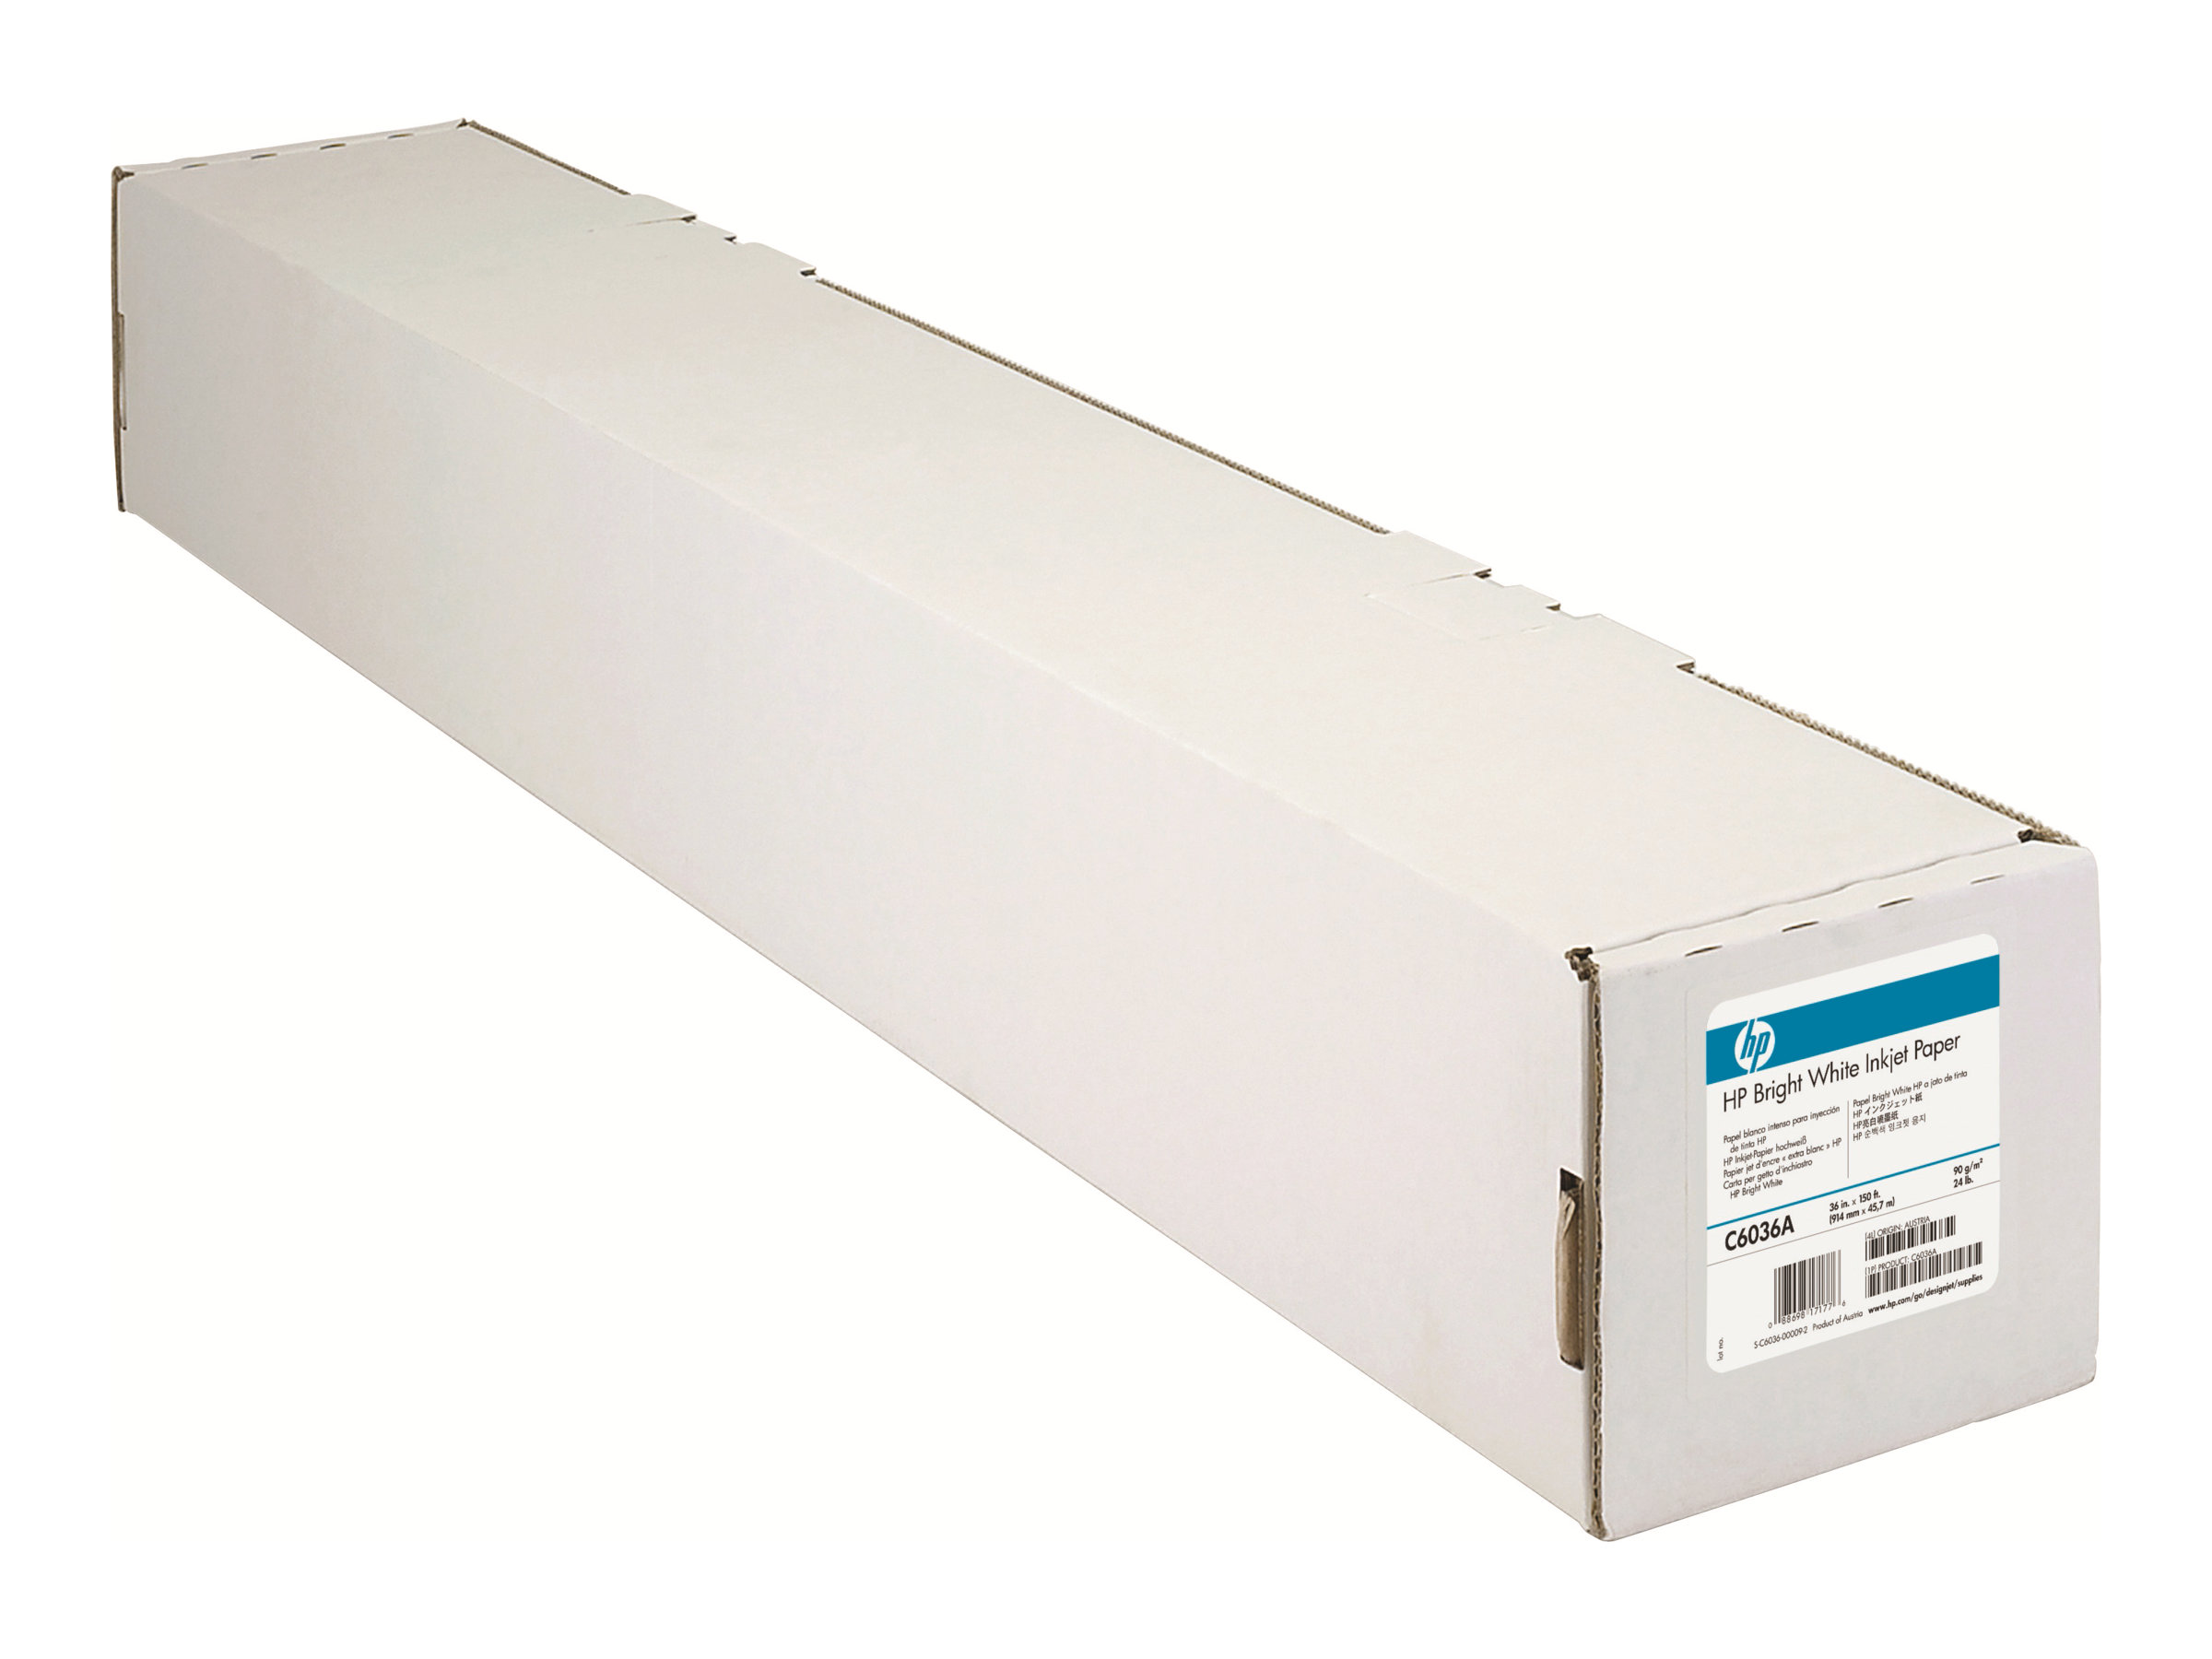 HP Bright White Inkjet Paper - Matt - hochweiss - Rolle (91,4 cm x 45,7 m) - 90 g/m - 1 Rolle(n) Papier